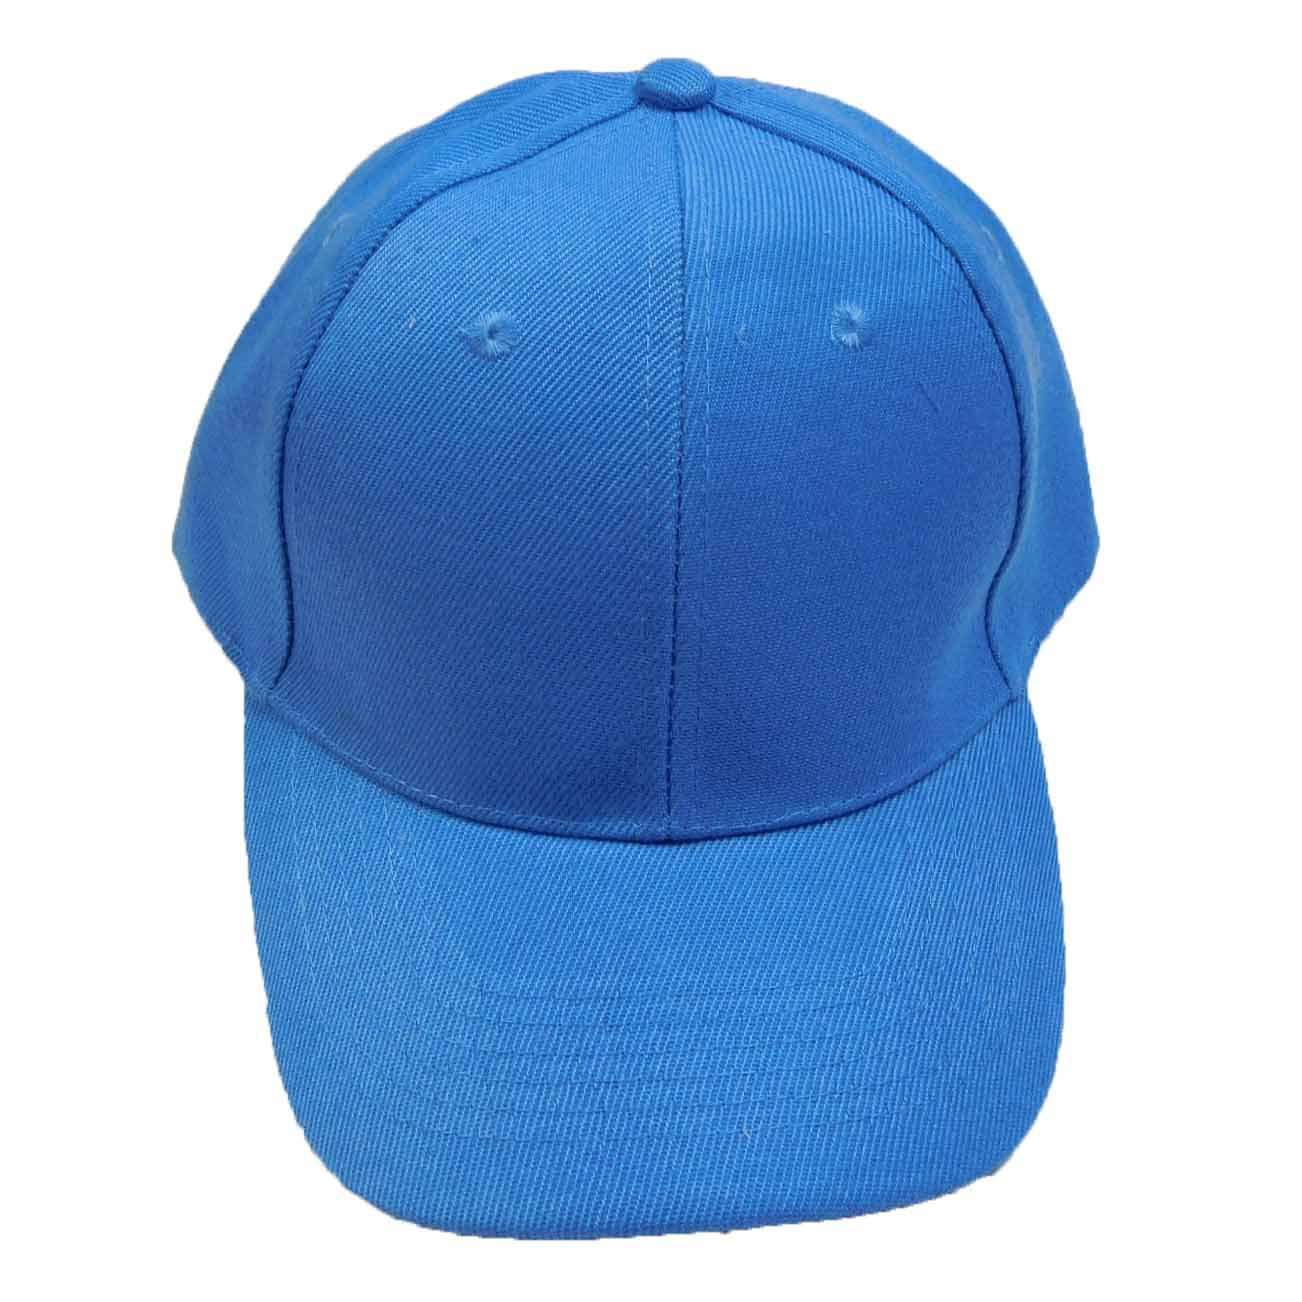 Baseball Cap with Stitched Bill Cap Milani Hats    